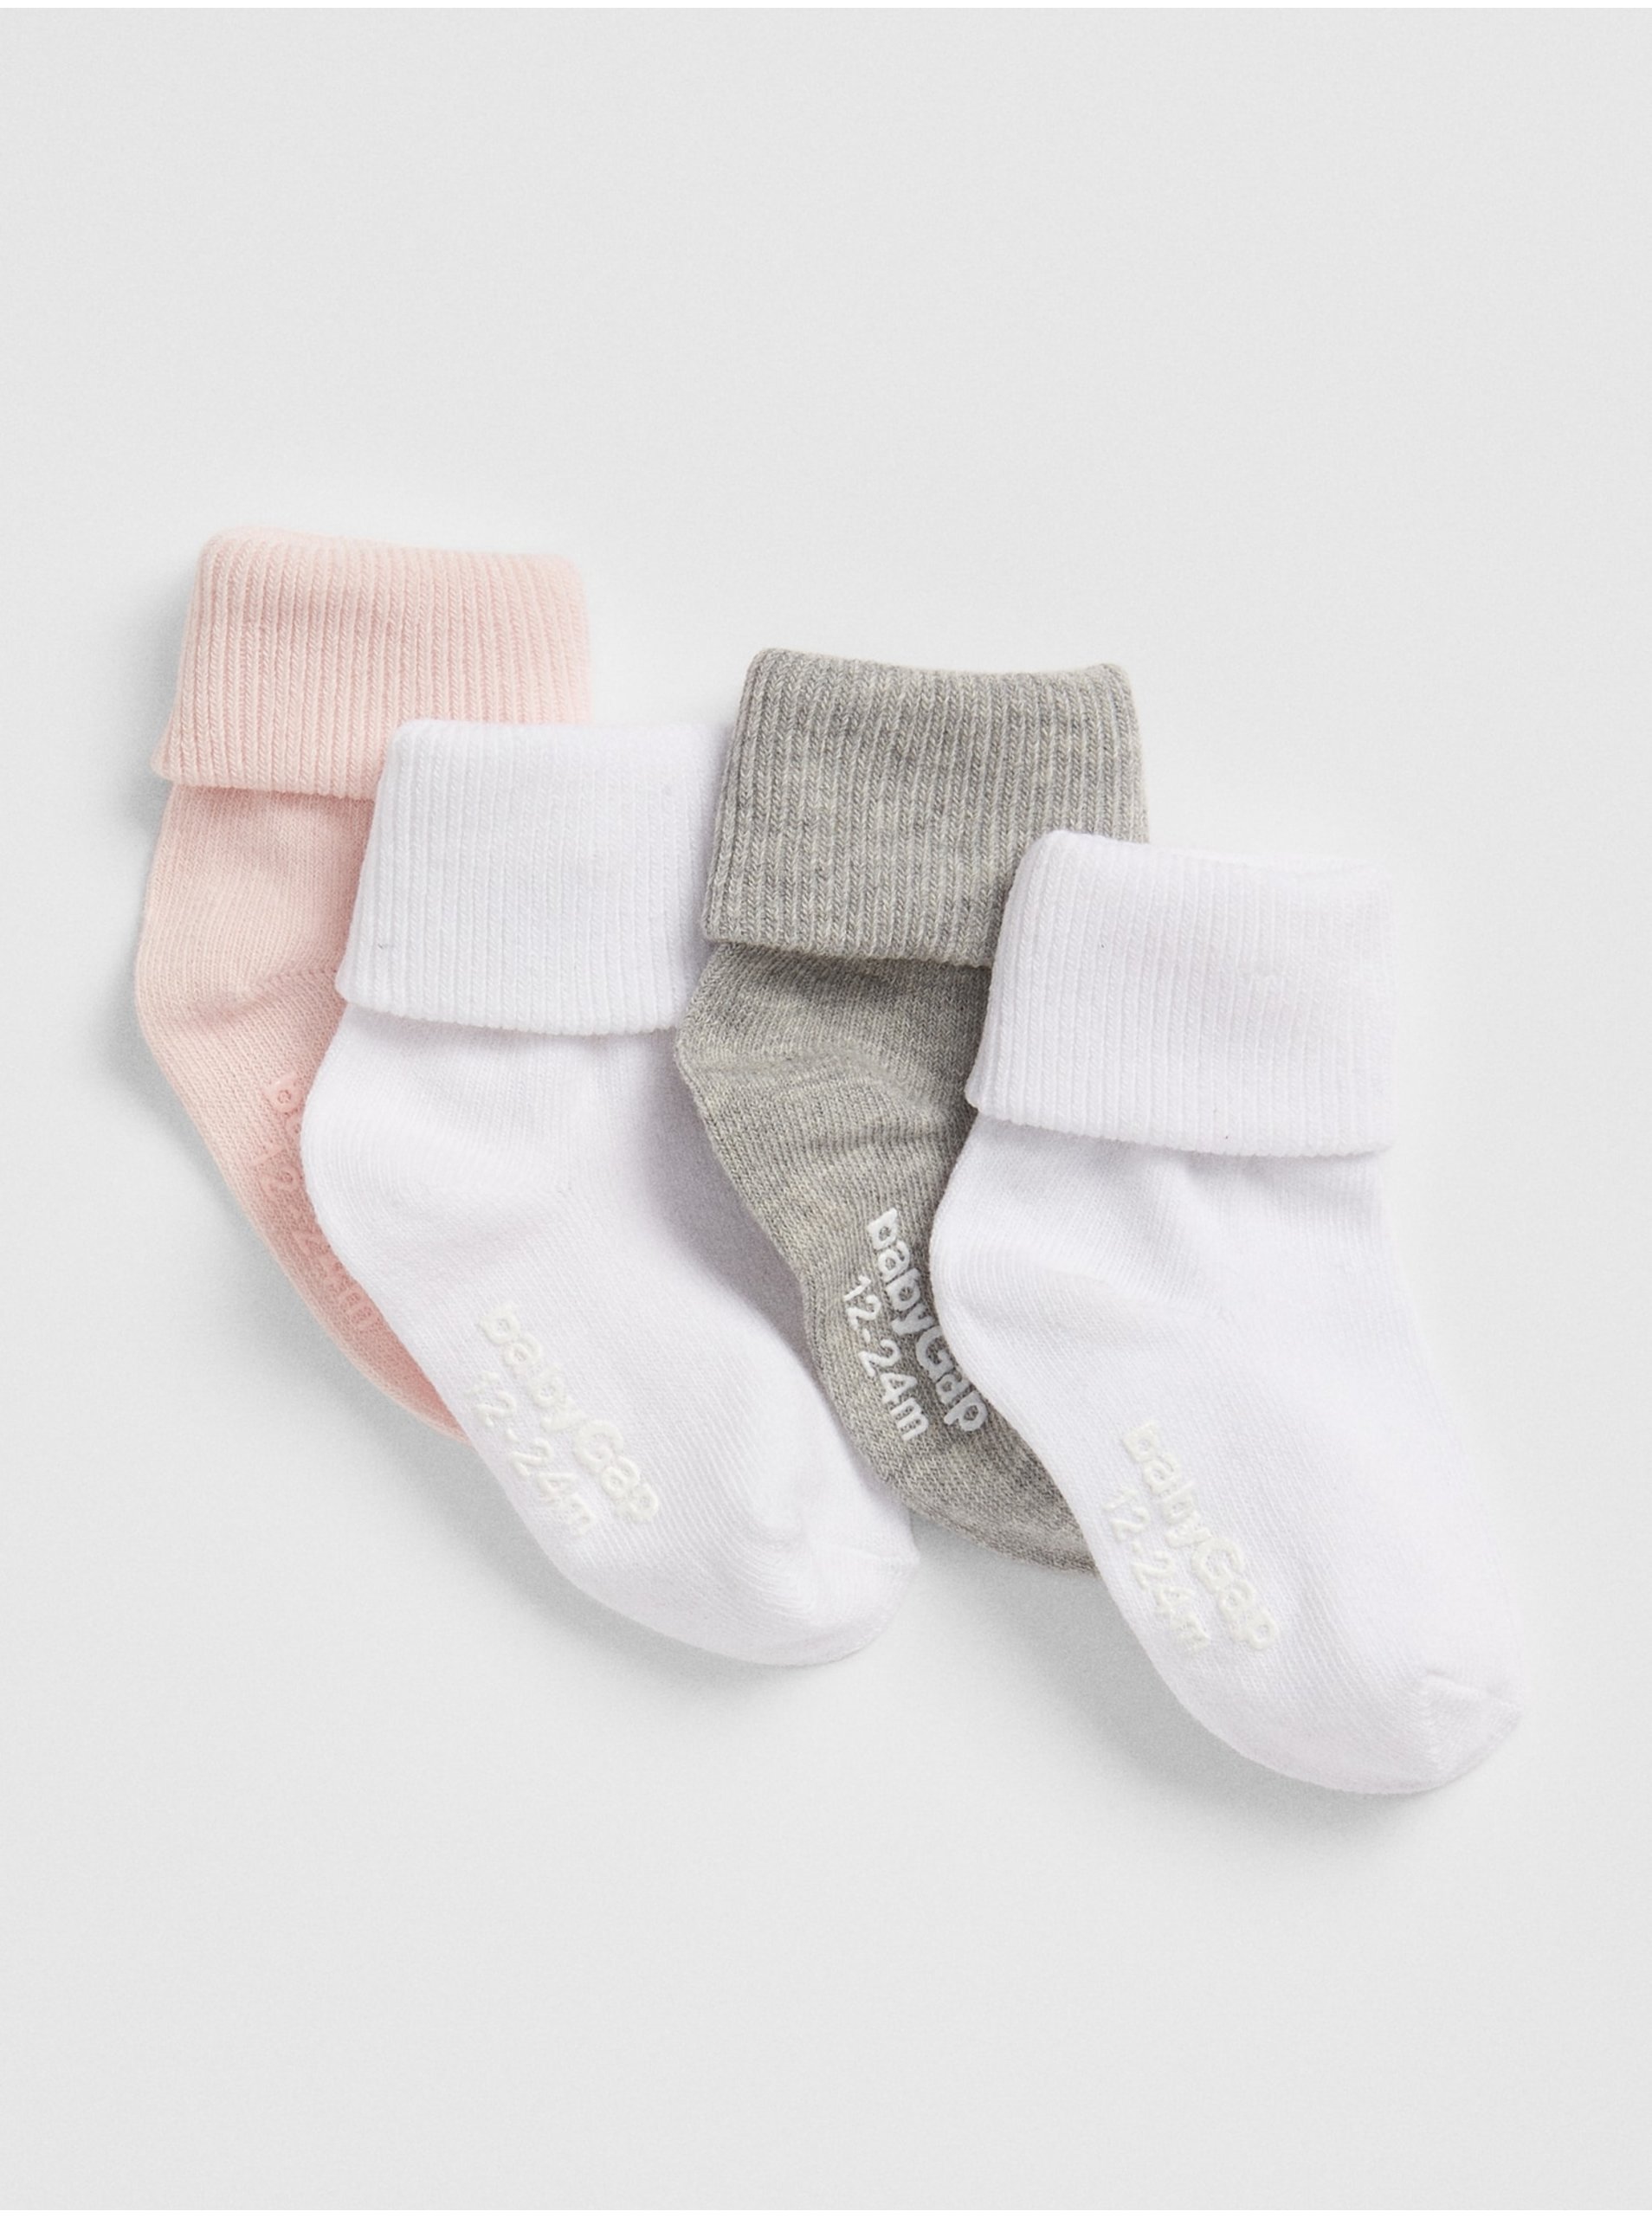 Lacno Detské ponožky roll crew socks, 4 páry Farebná